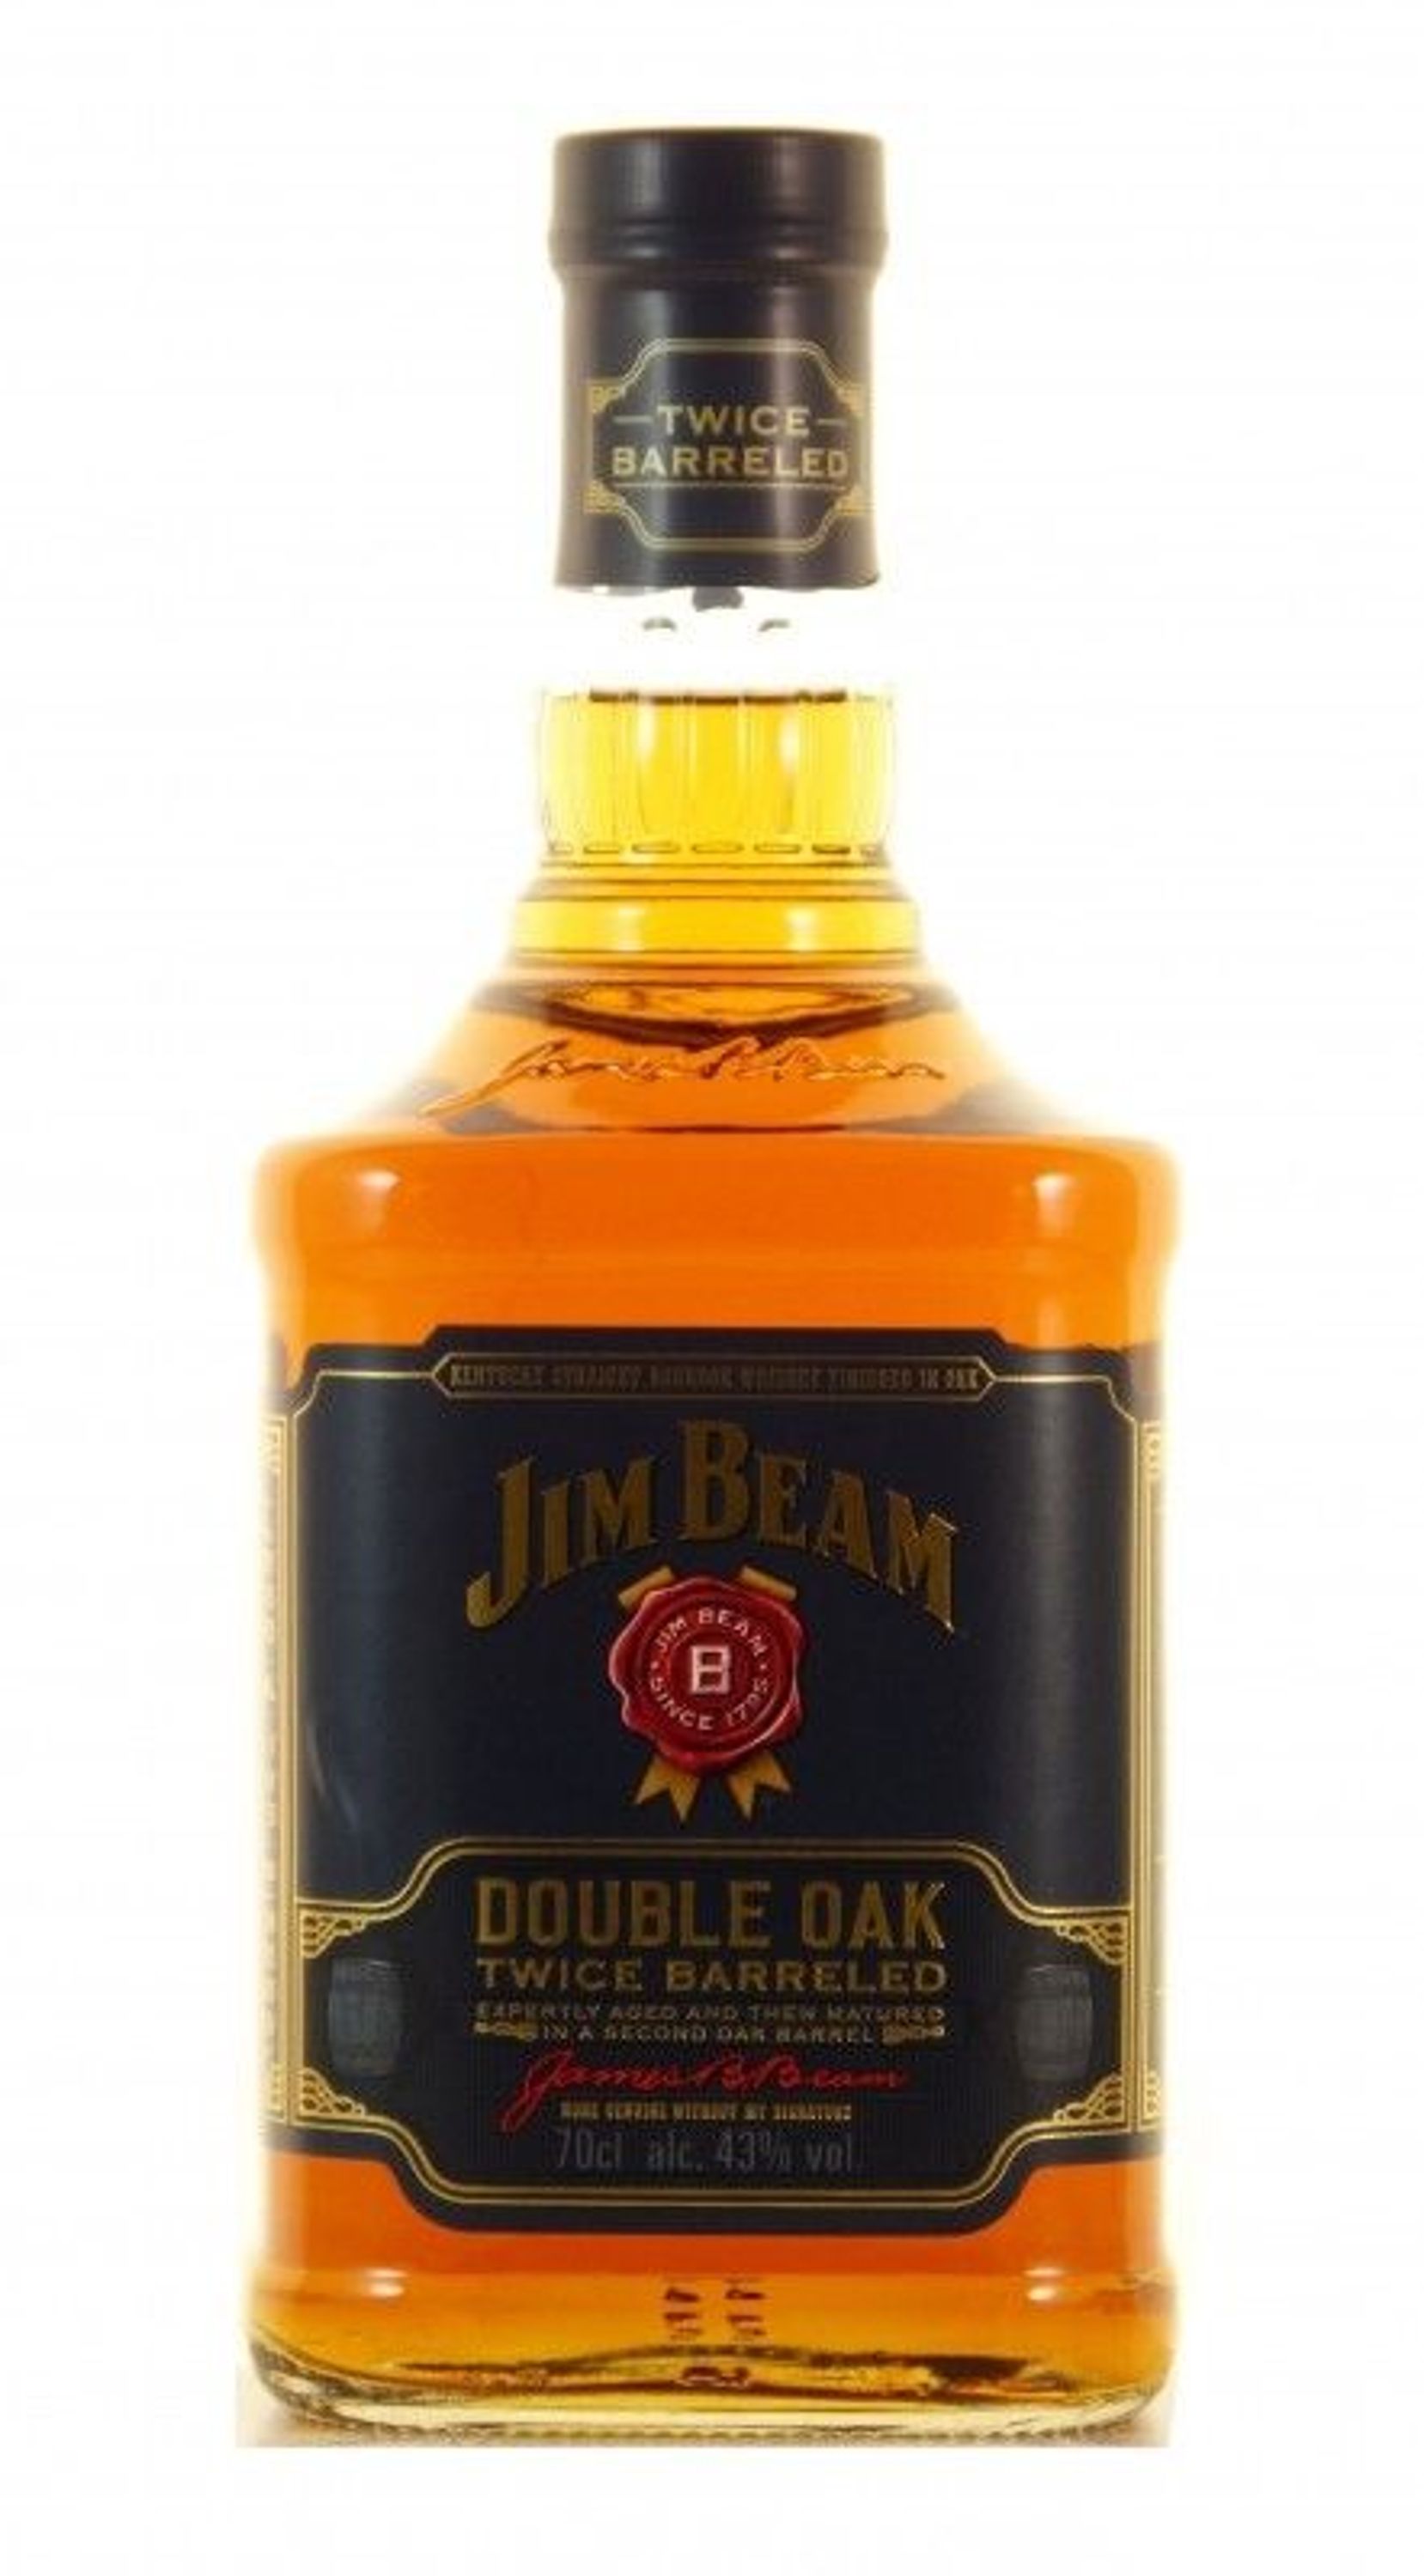 Jim Beam Double Oak Kentucky Straight Bourbon Whisky 0,7l, alk. 43 tilavuusprosenttia.